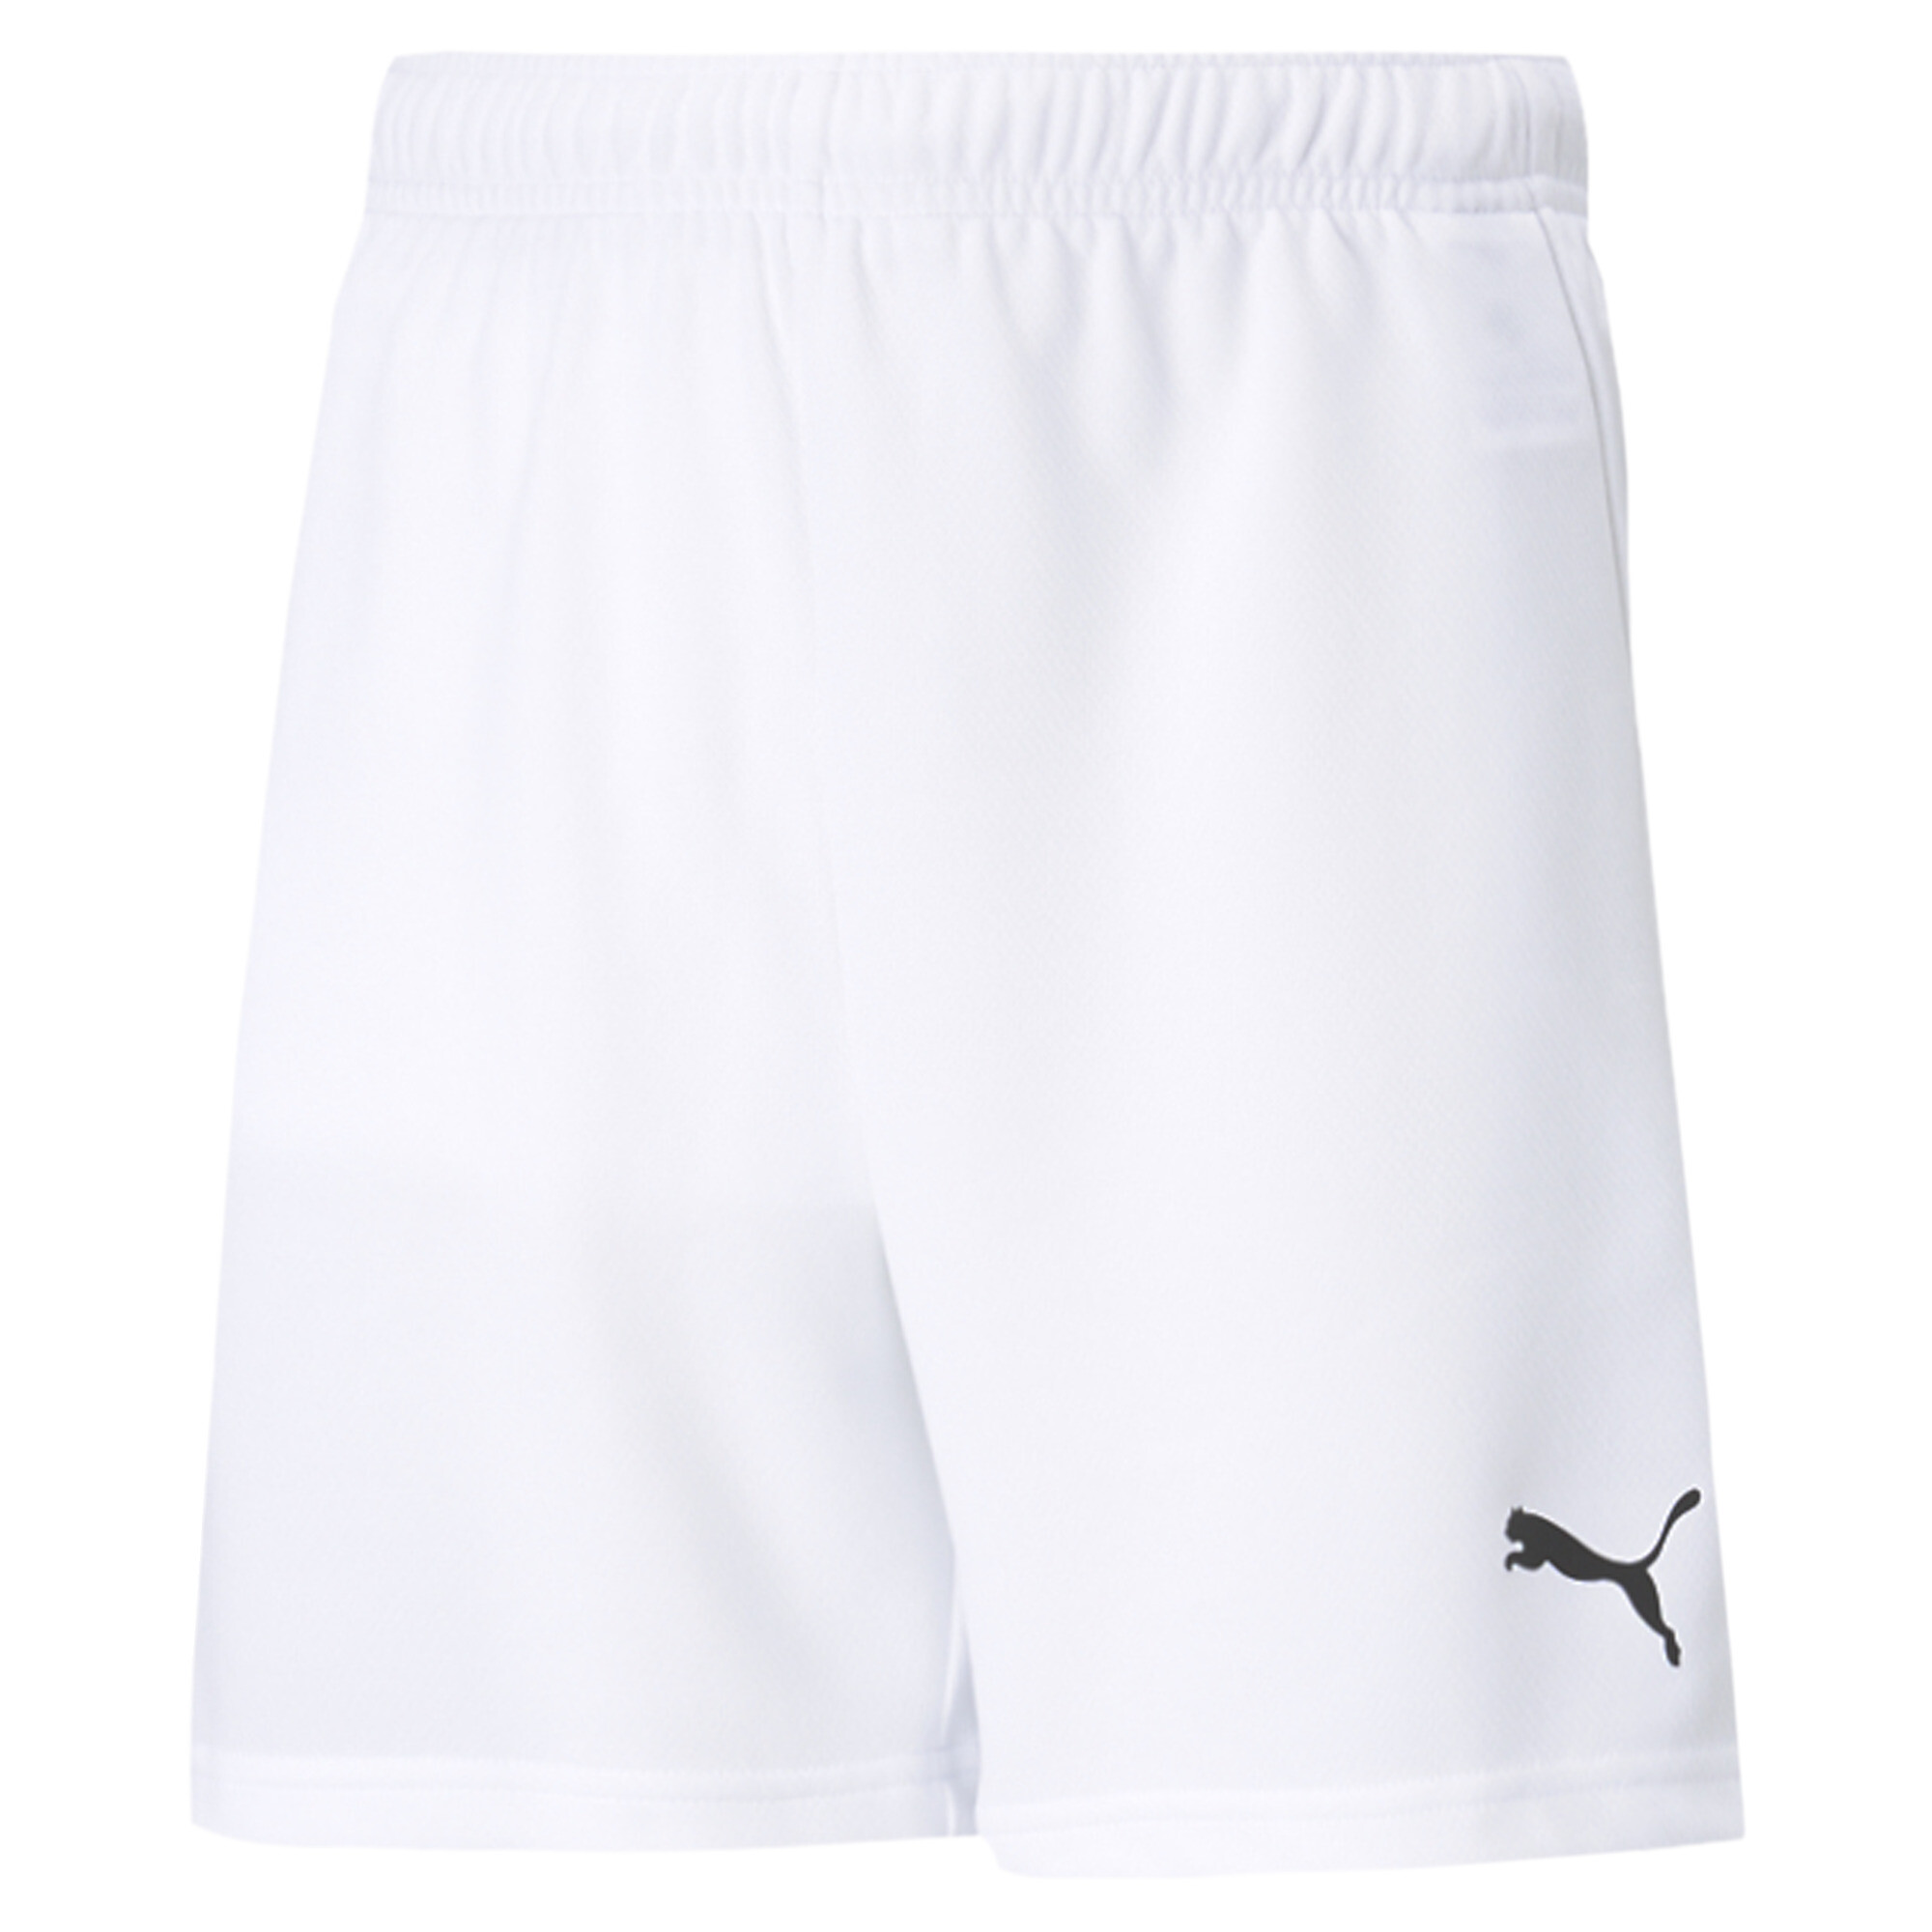 Puma Team RISE Youth Football Shorts, White, Size 11-12Y, Clothing